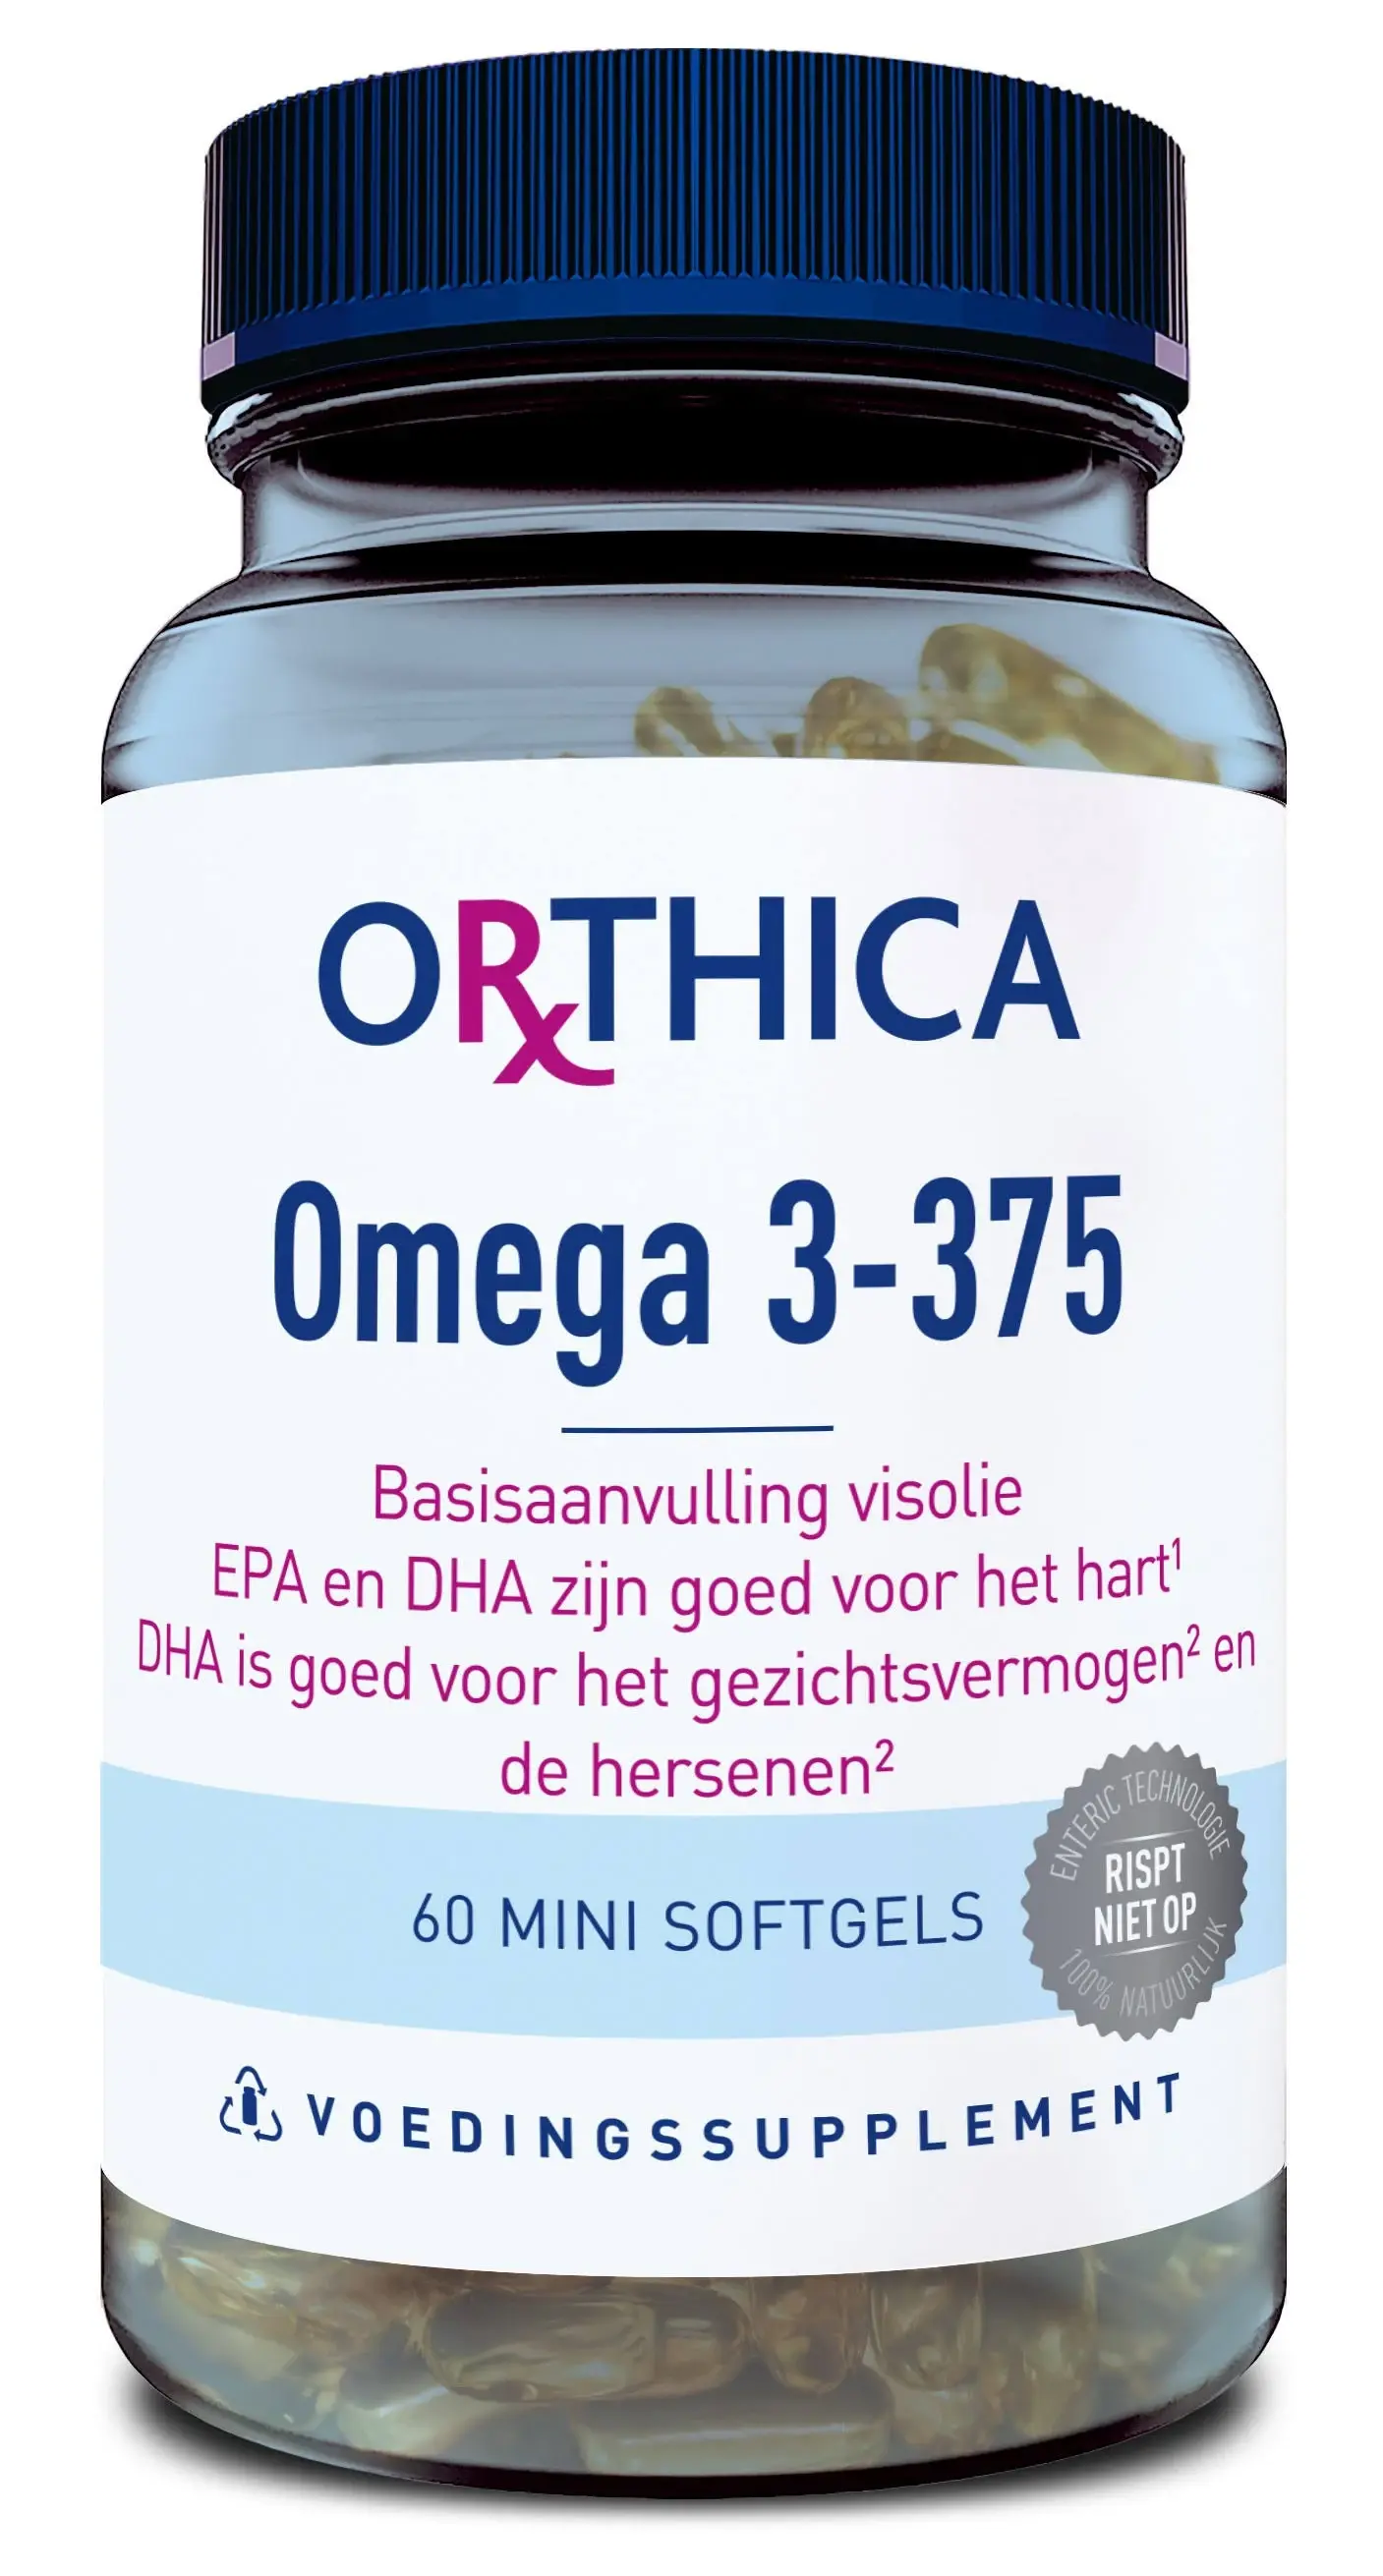 Orthica - Omega 3-375